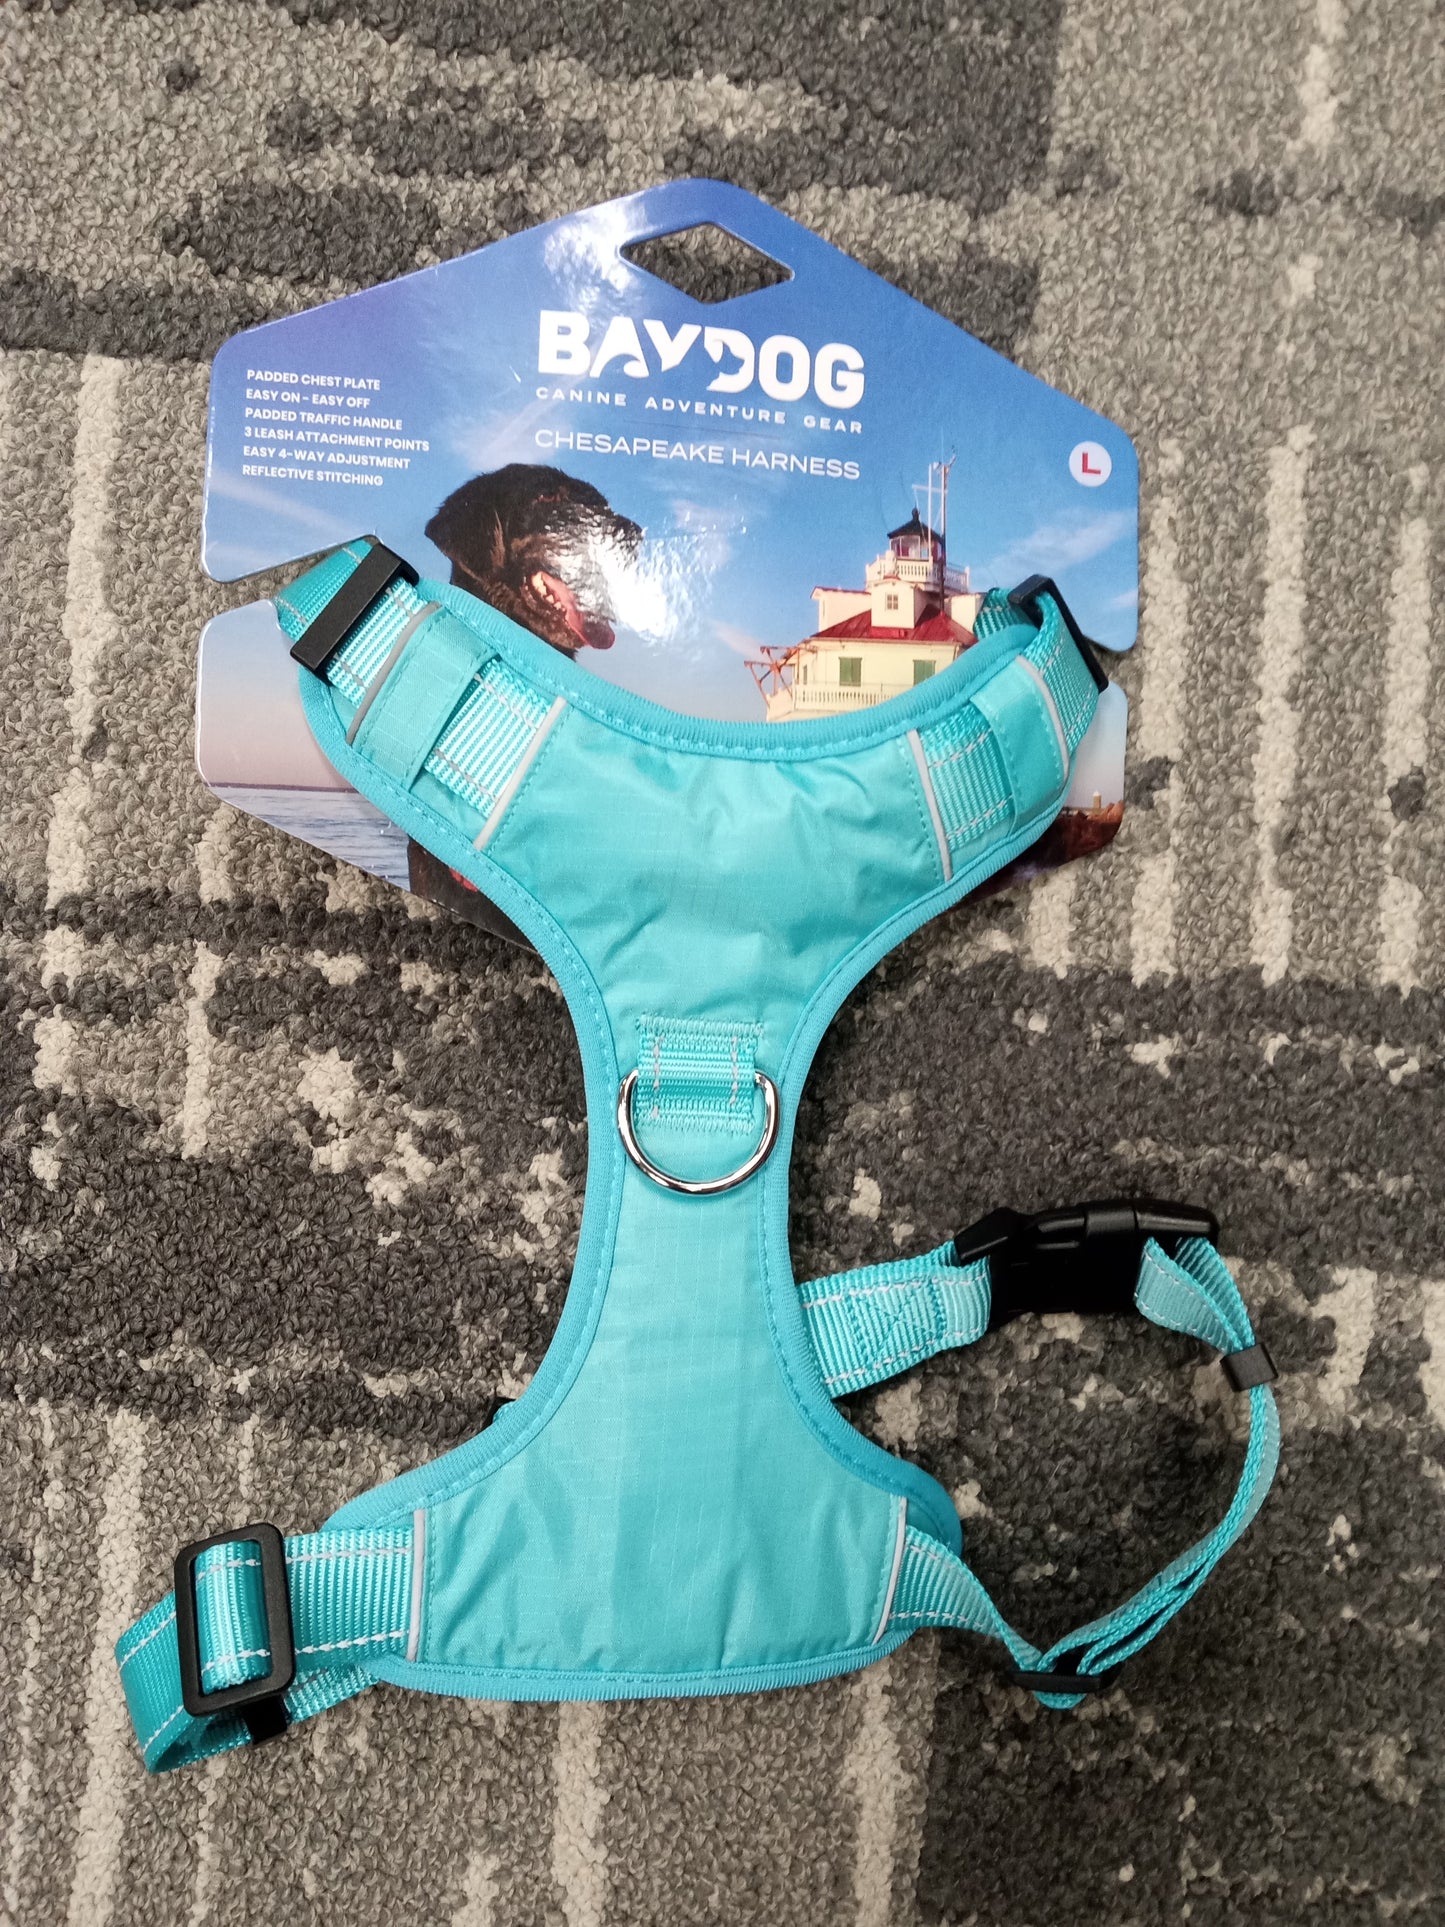 Chesapeake Harness by BAYDOG